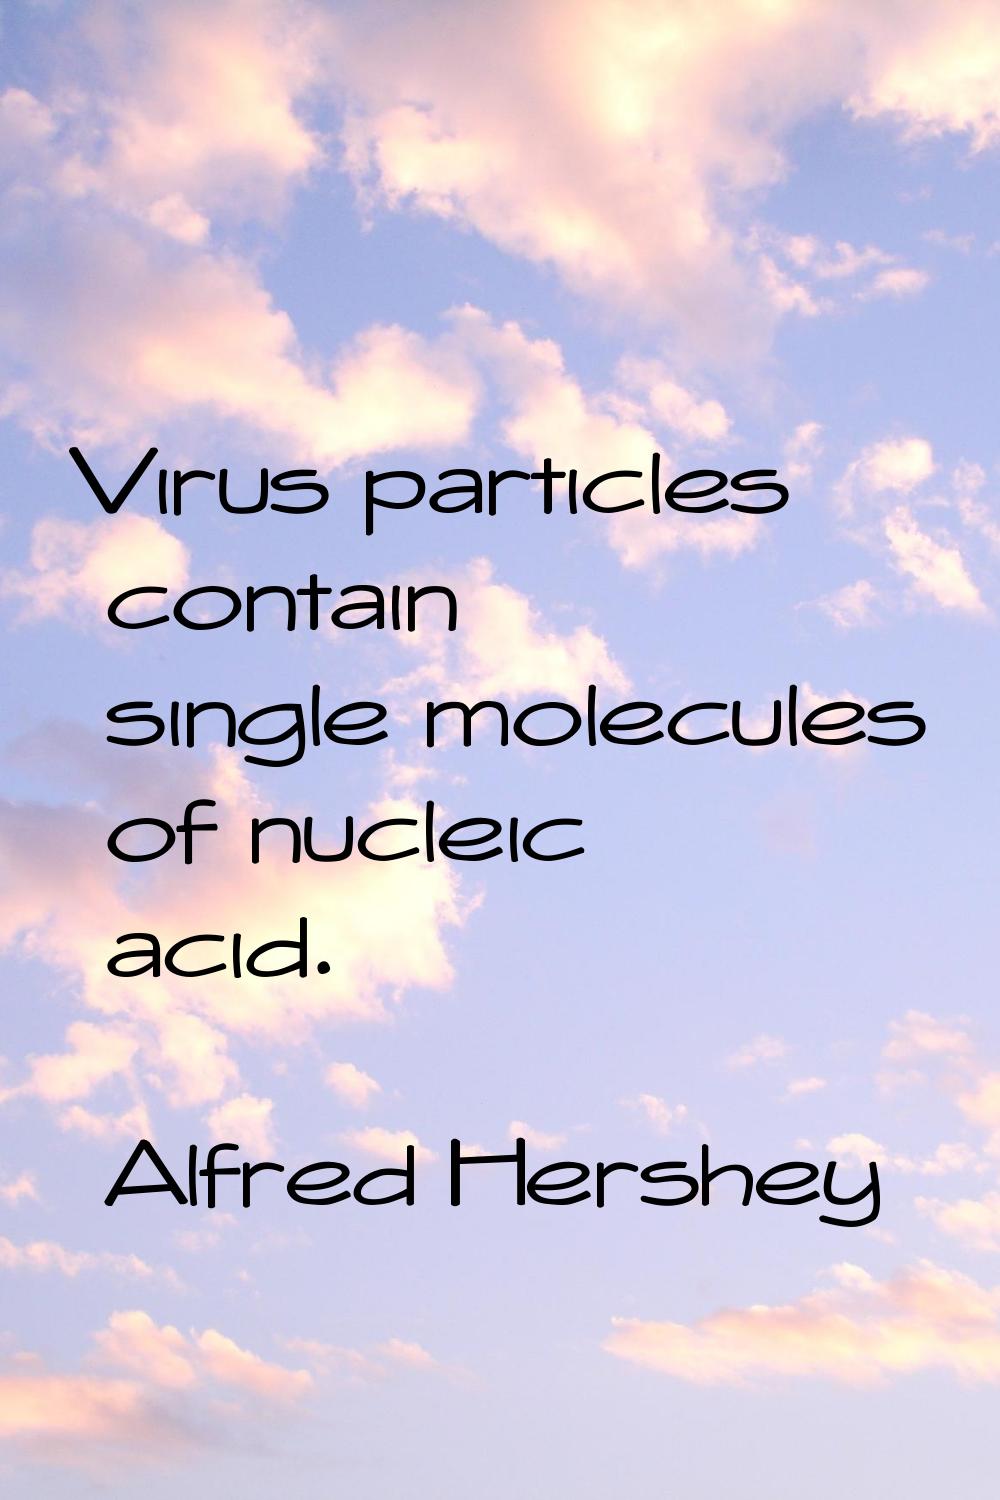 Virus particles contain single molecules of nucleic acid.